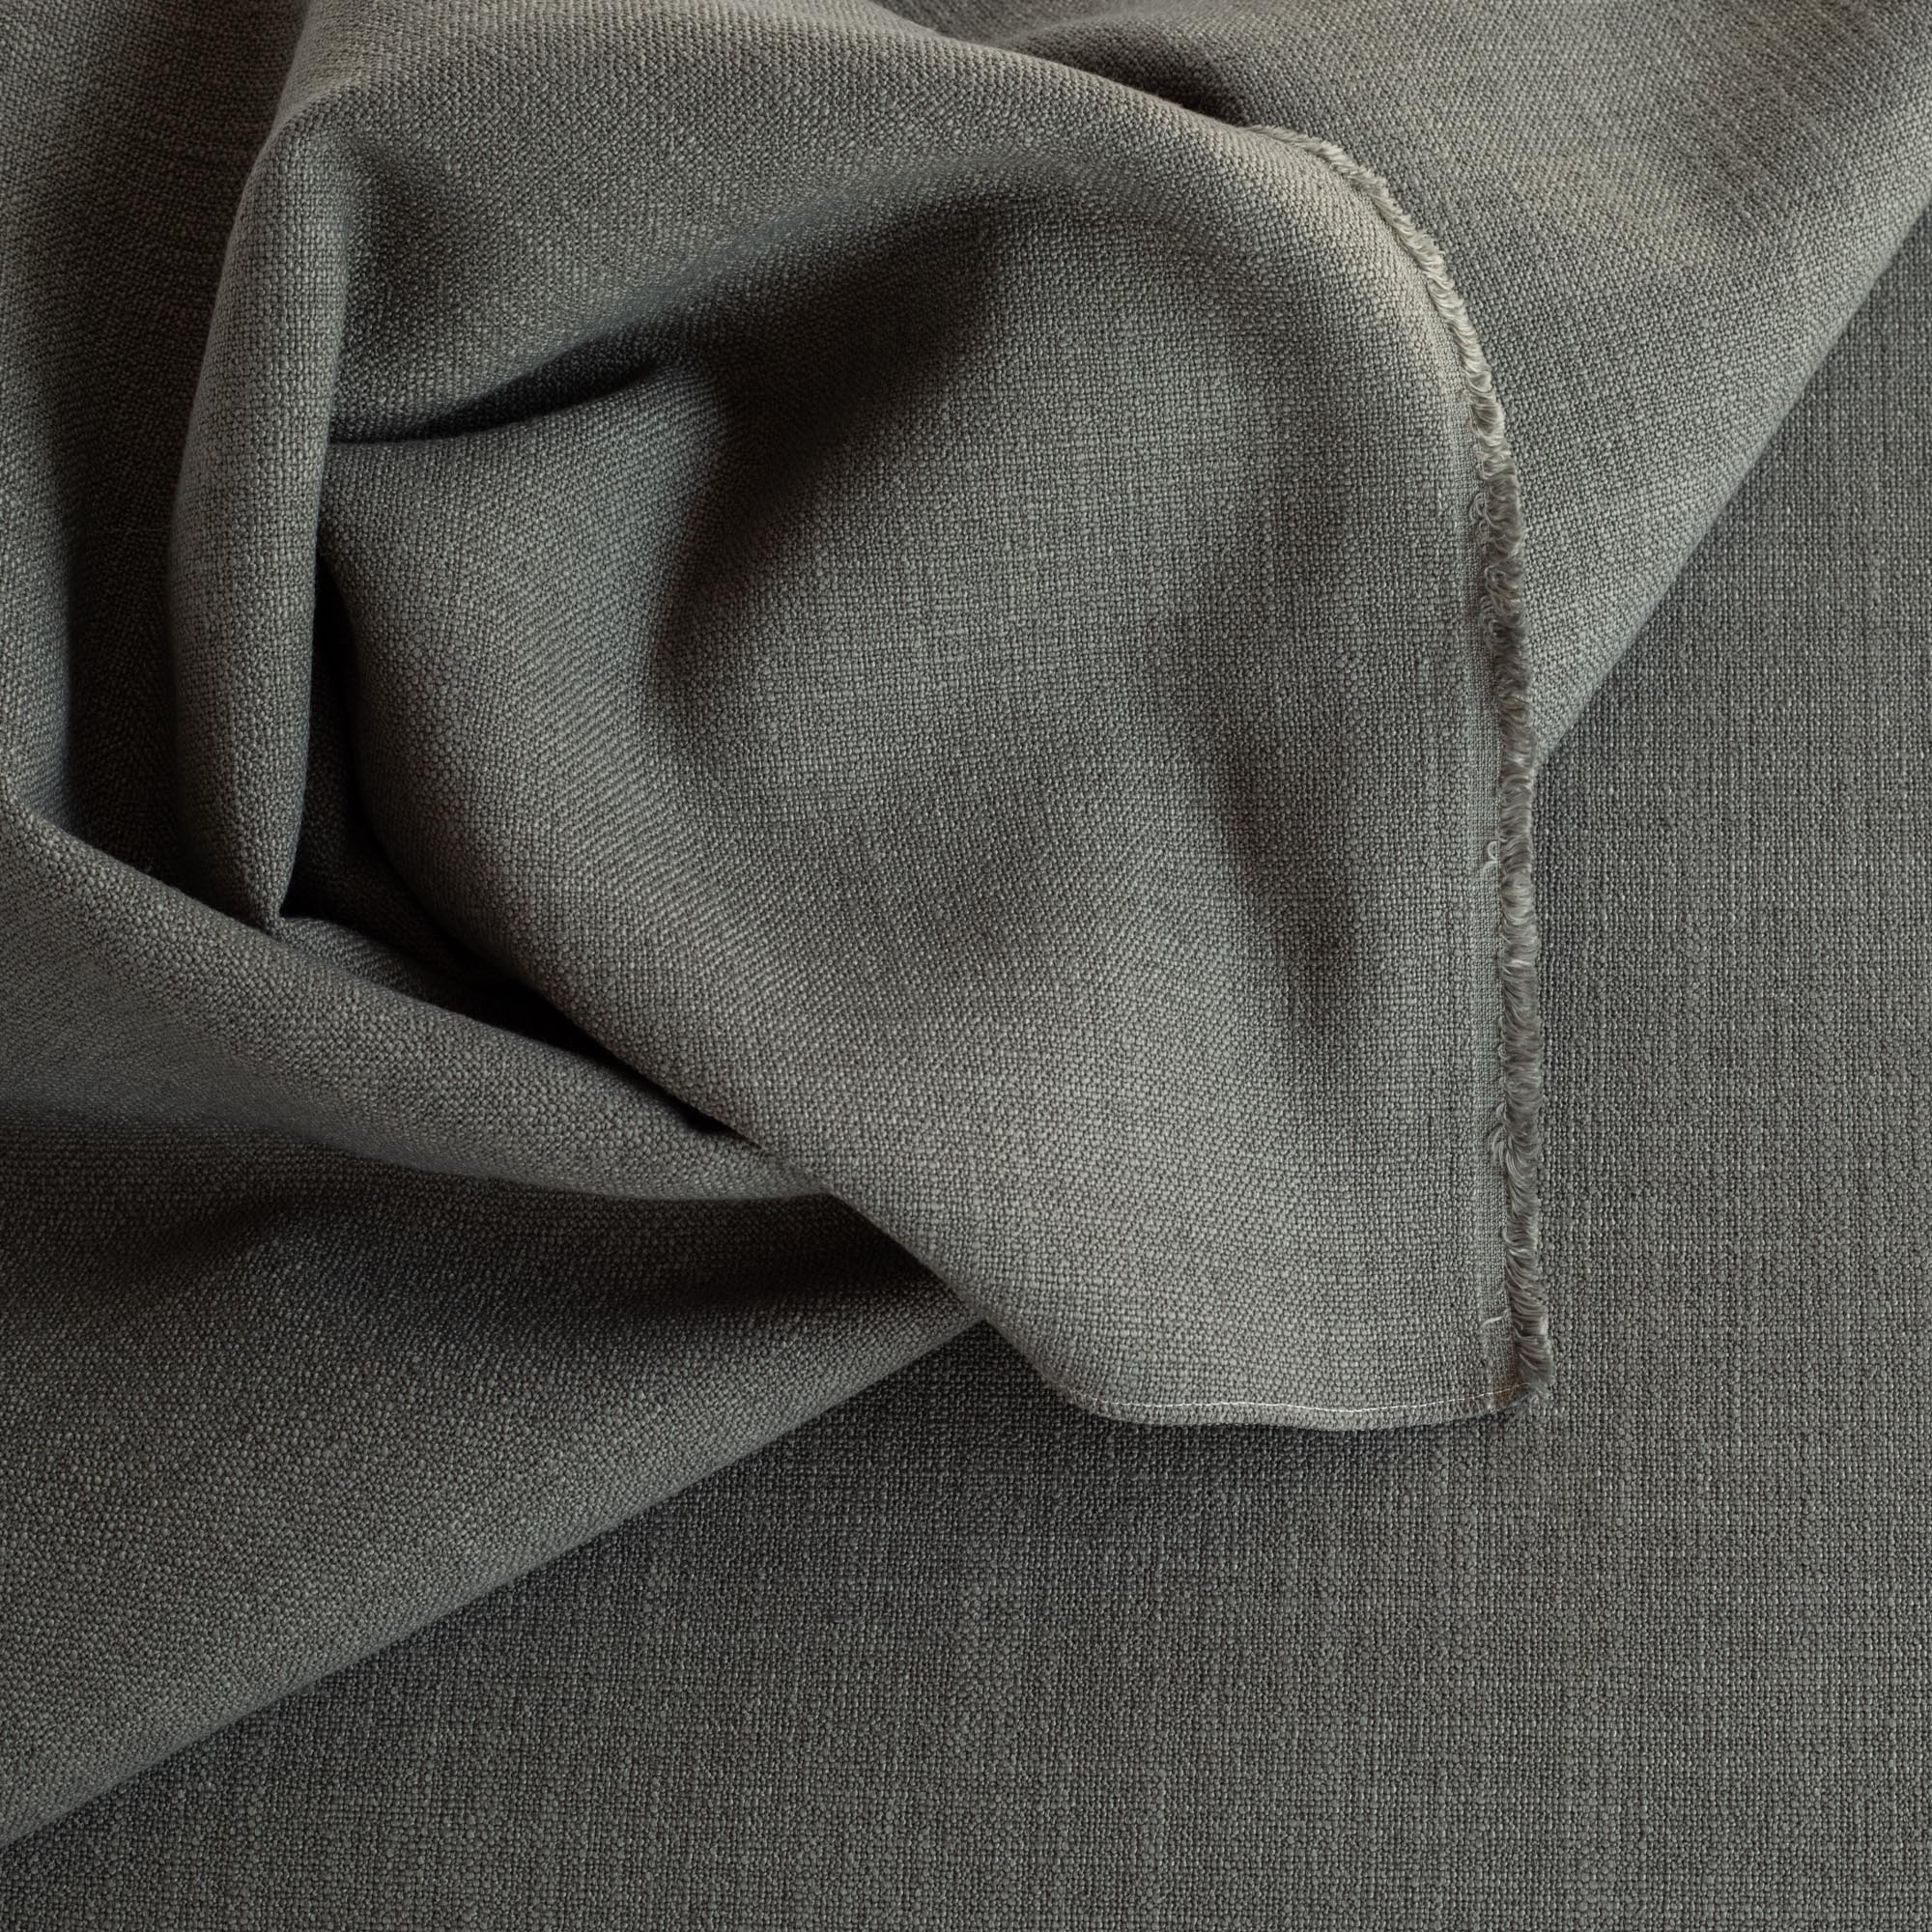 a dark grey high performance upholstery fabric